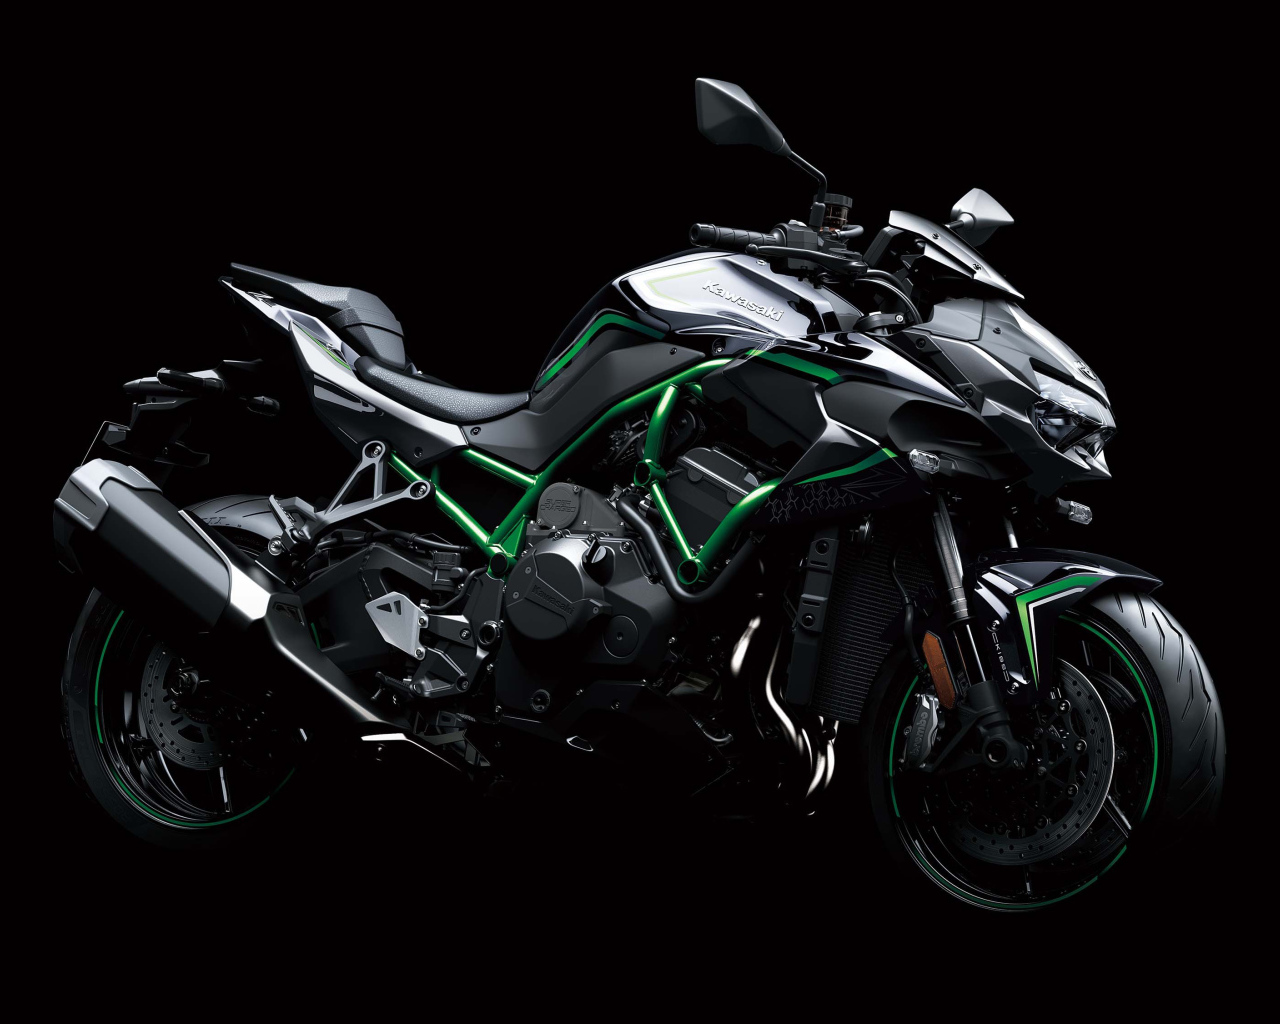 2019 Kawasaki Z H2 motorcycle on a black background